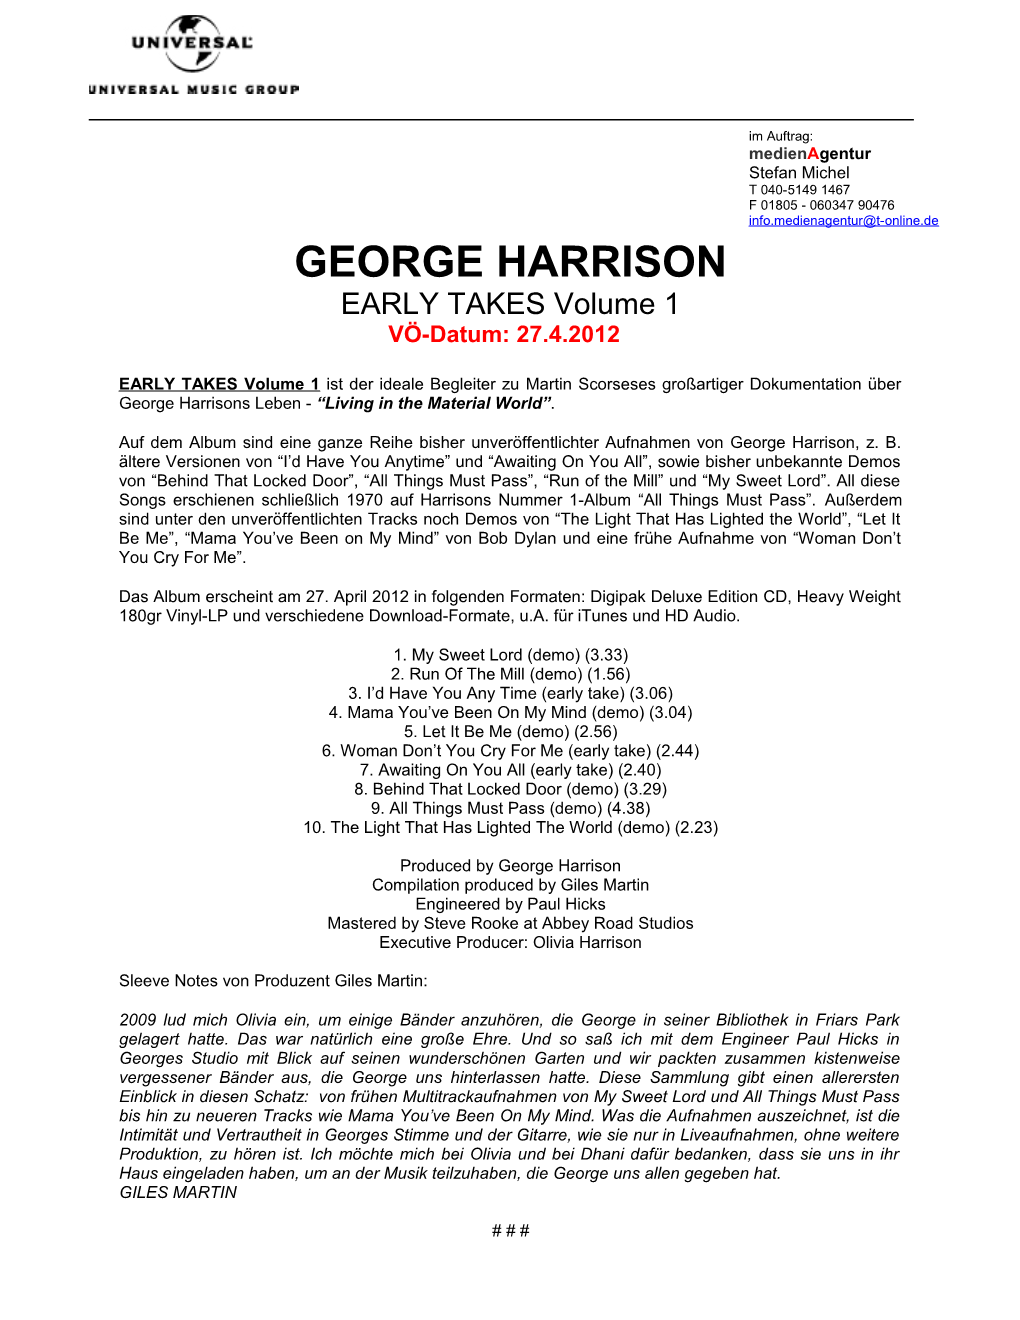 GEORGE HARRISON EARLY TAKES Volume 1 VÖ-Datum: 27.4.2012